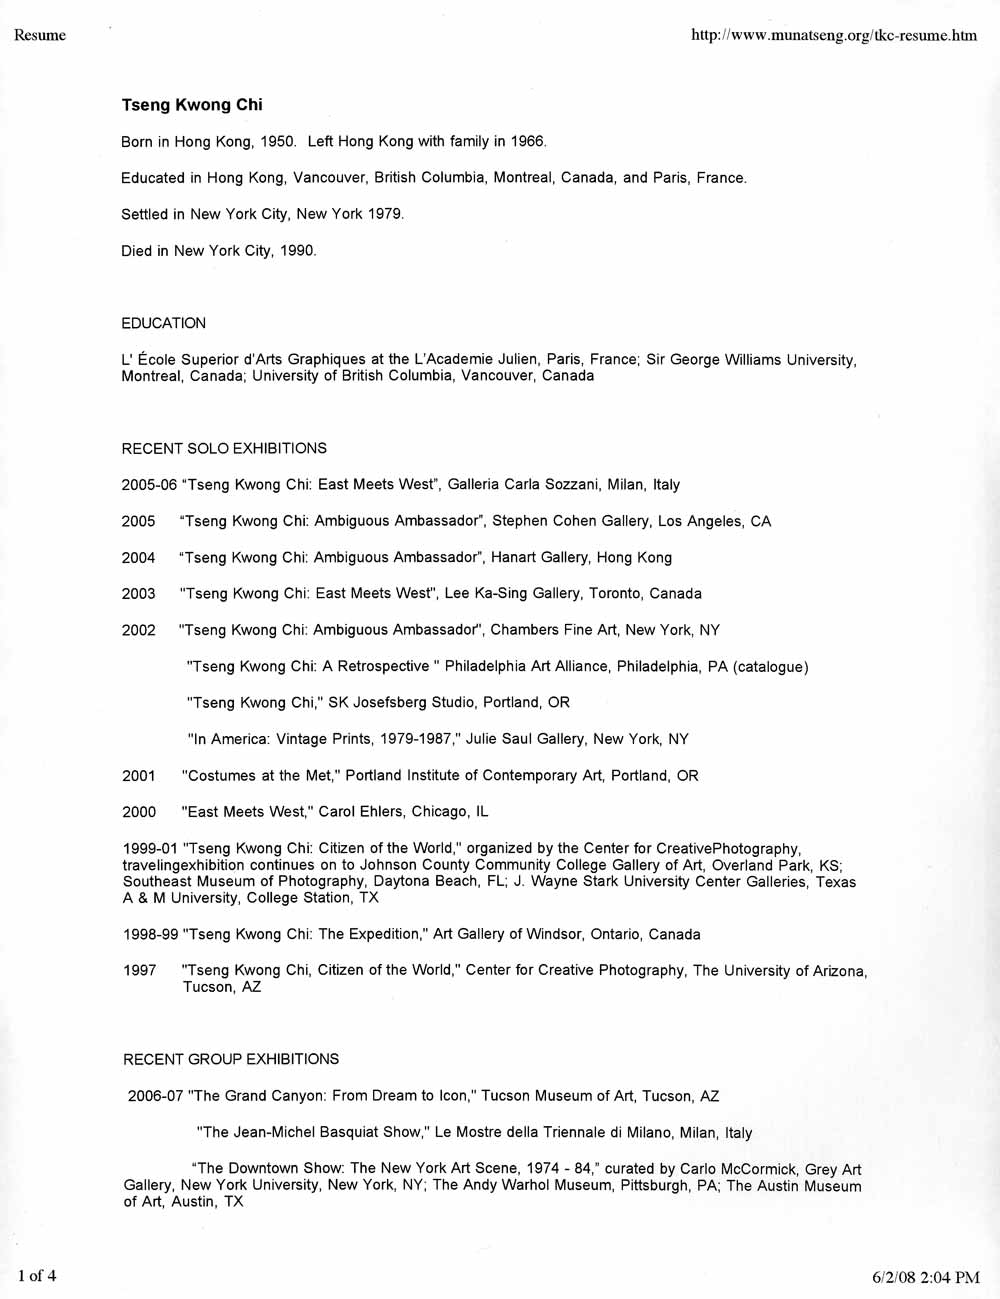 Tseng Kwong Chi's Resume, pg 1